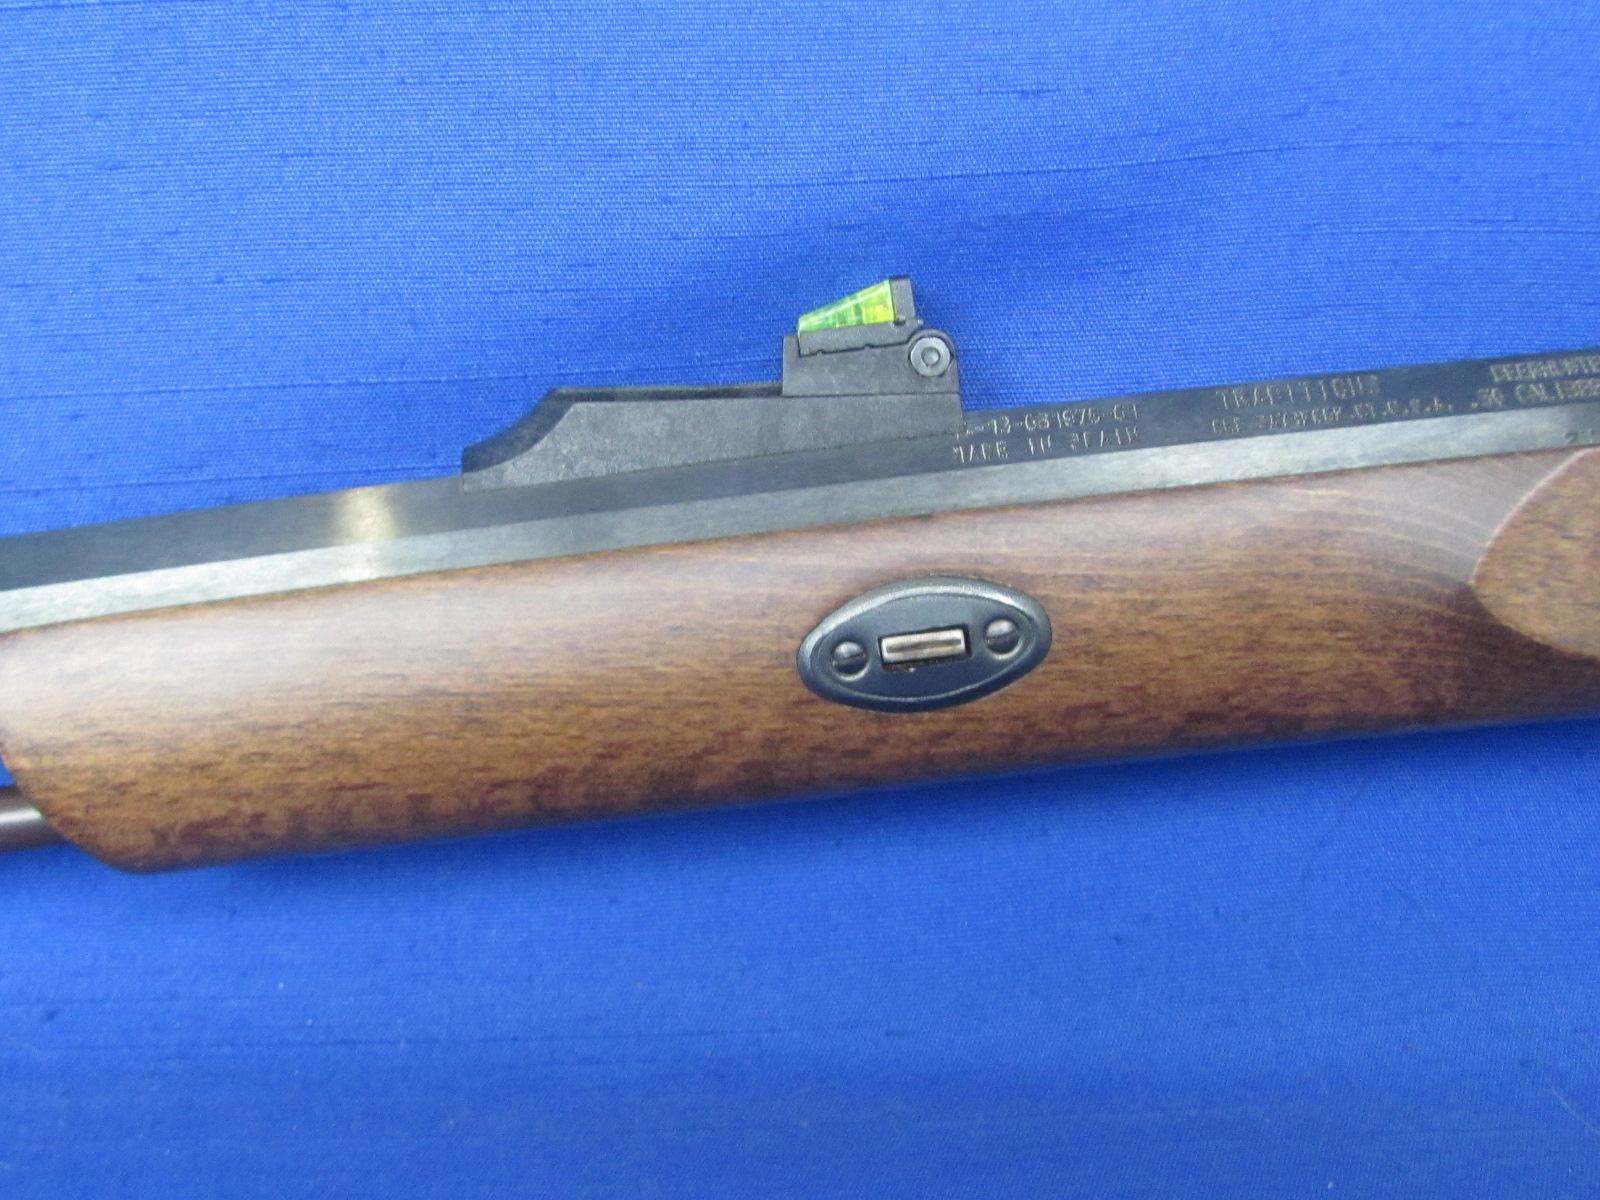 Traditions Mussleloader Deerhunter Left Handed Rifle - .50 Caliber – In Original Box